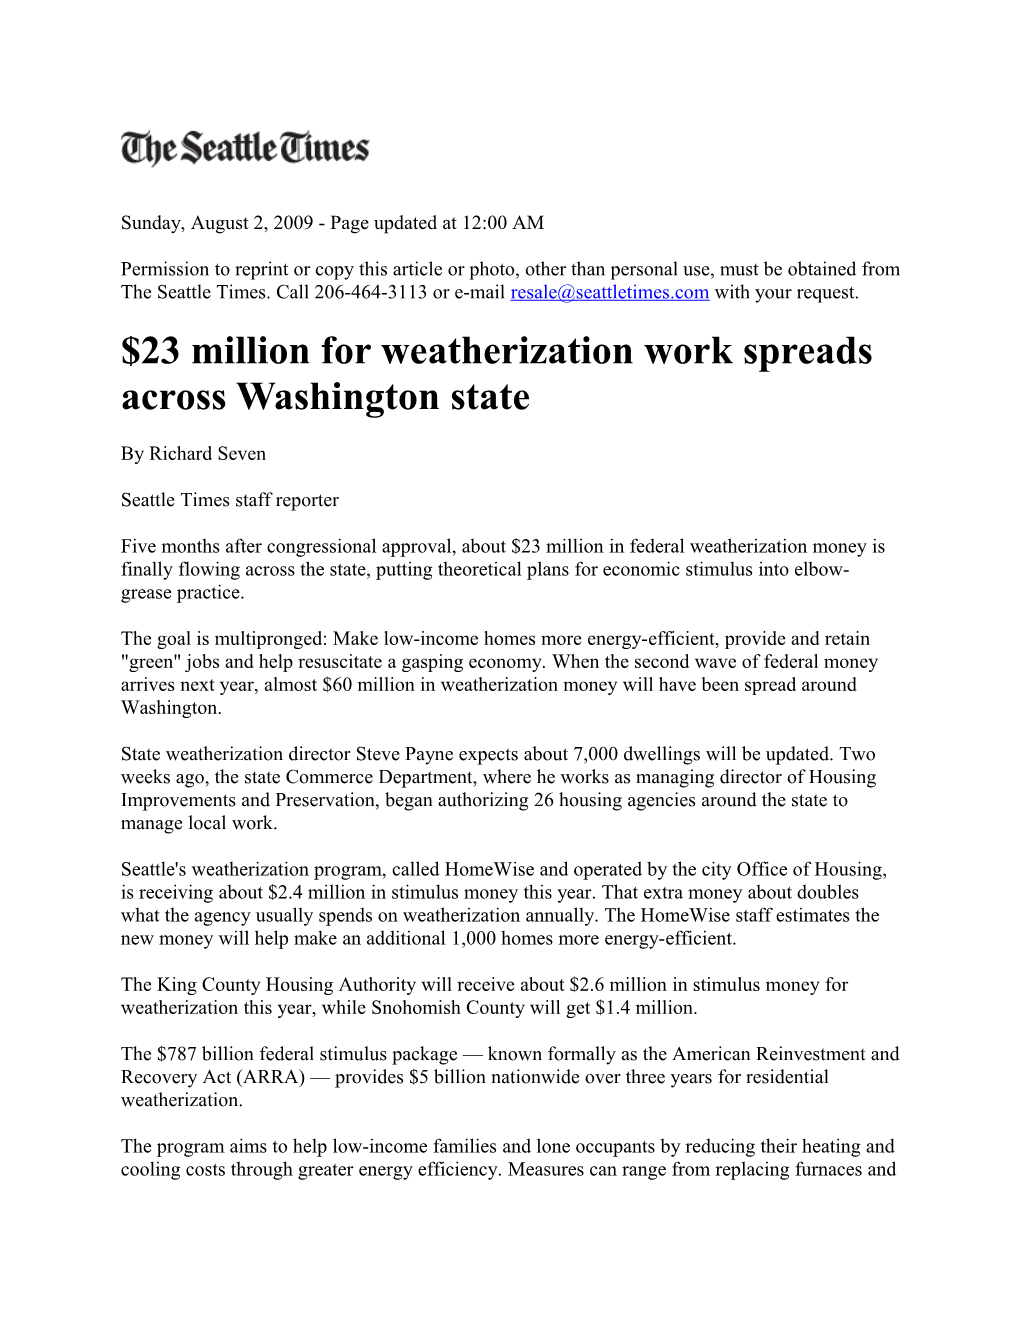 $23 Million for Weatherization Work Spreads Across Washington State